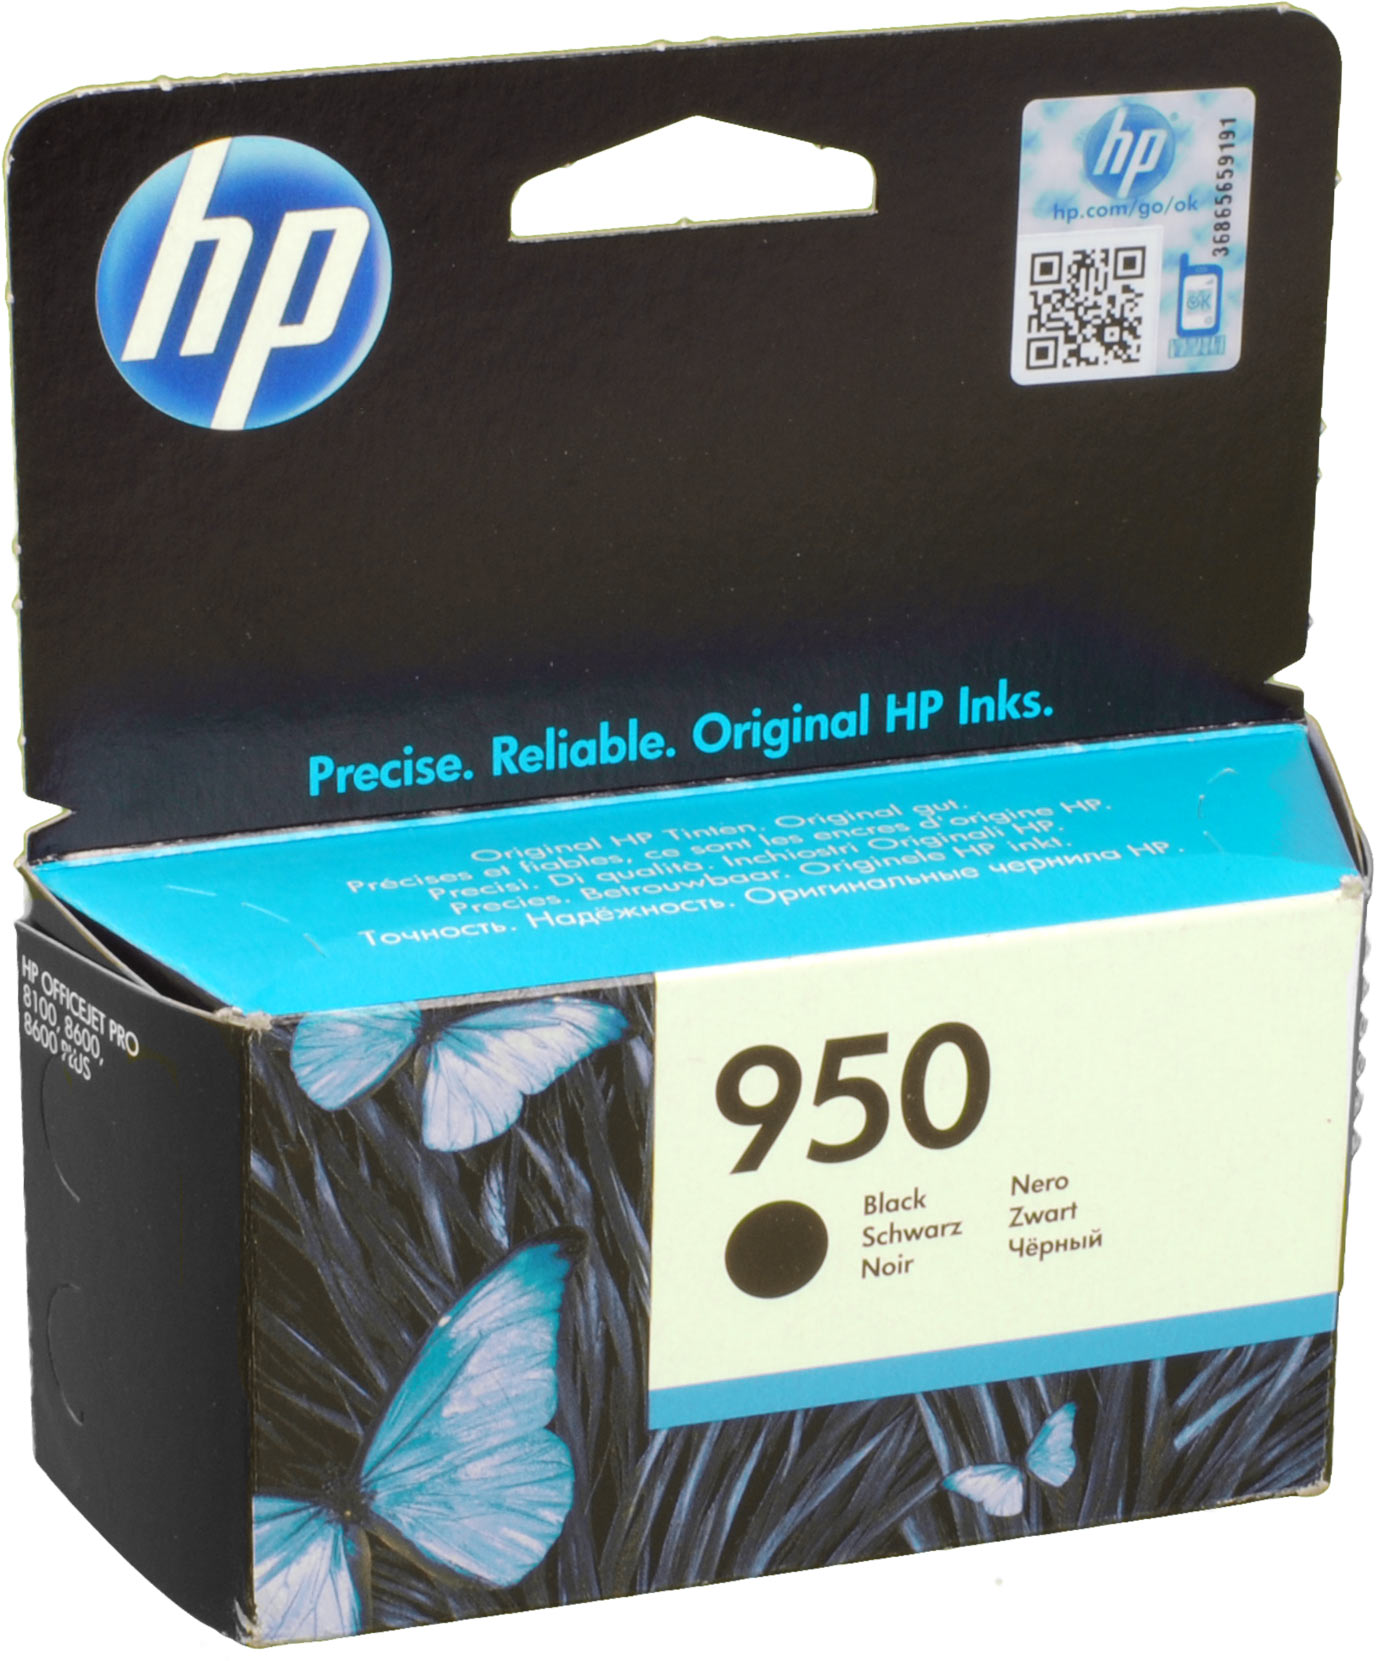 HP Tinte CN049AE  950  schwarz